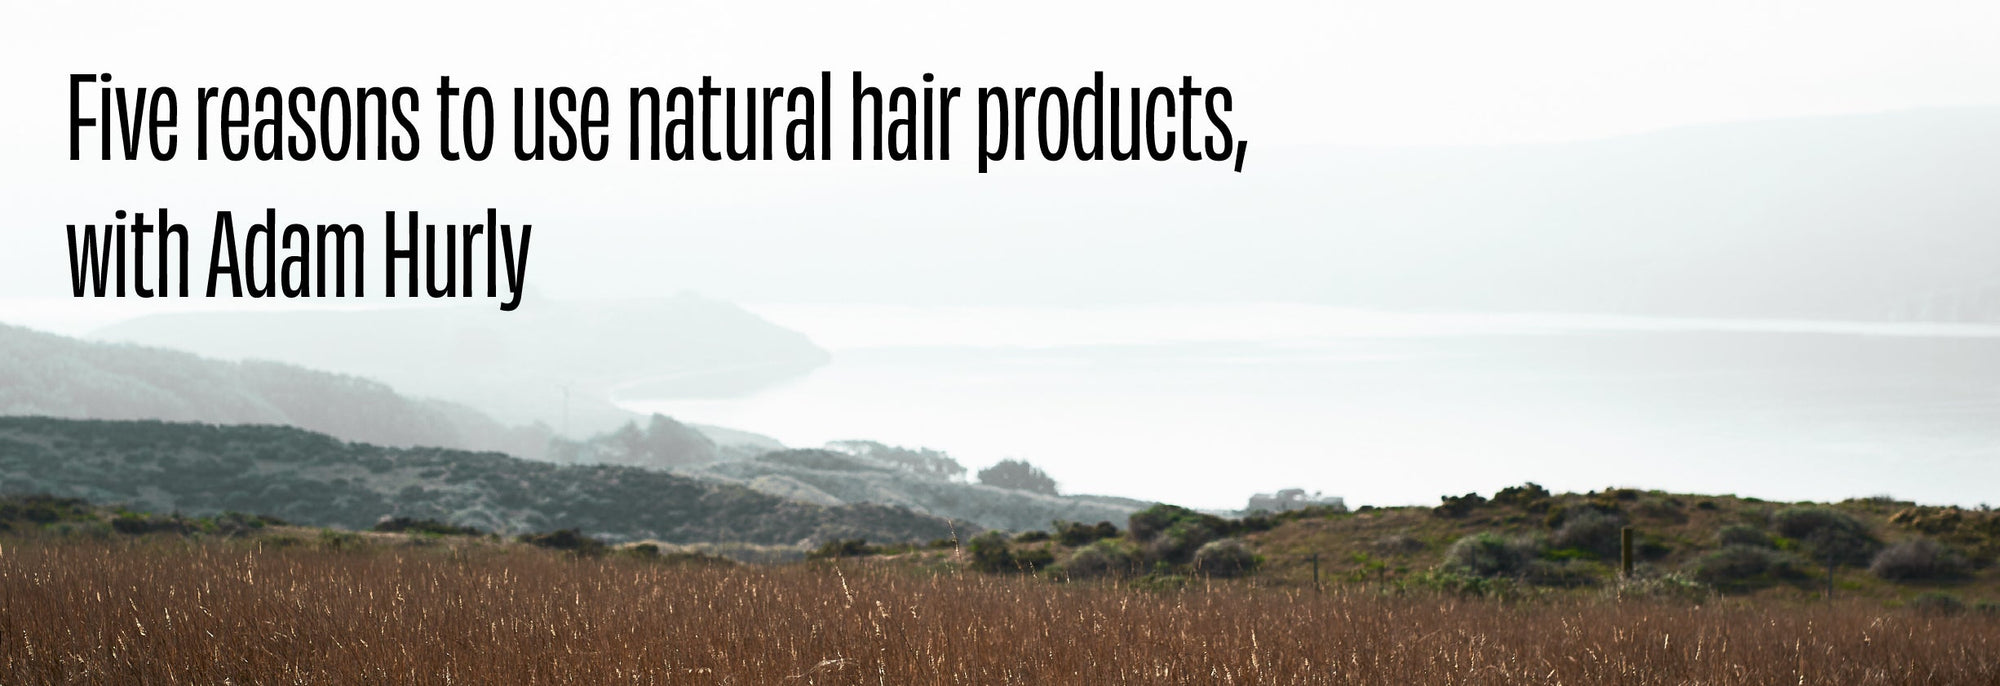 Five reasons to use natural hair products header